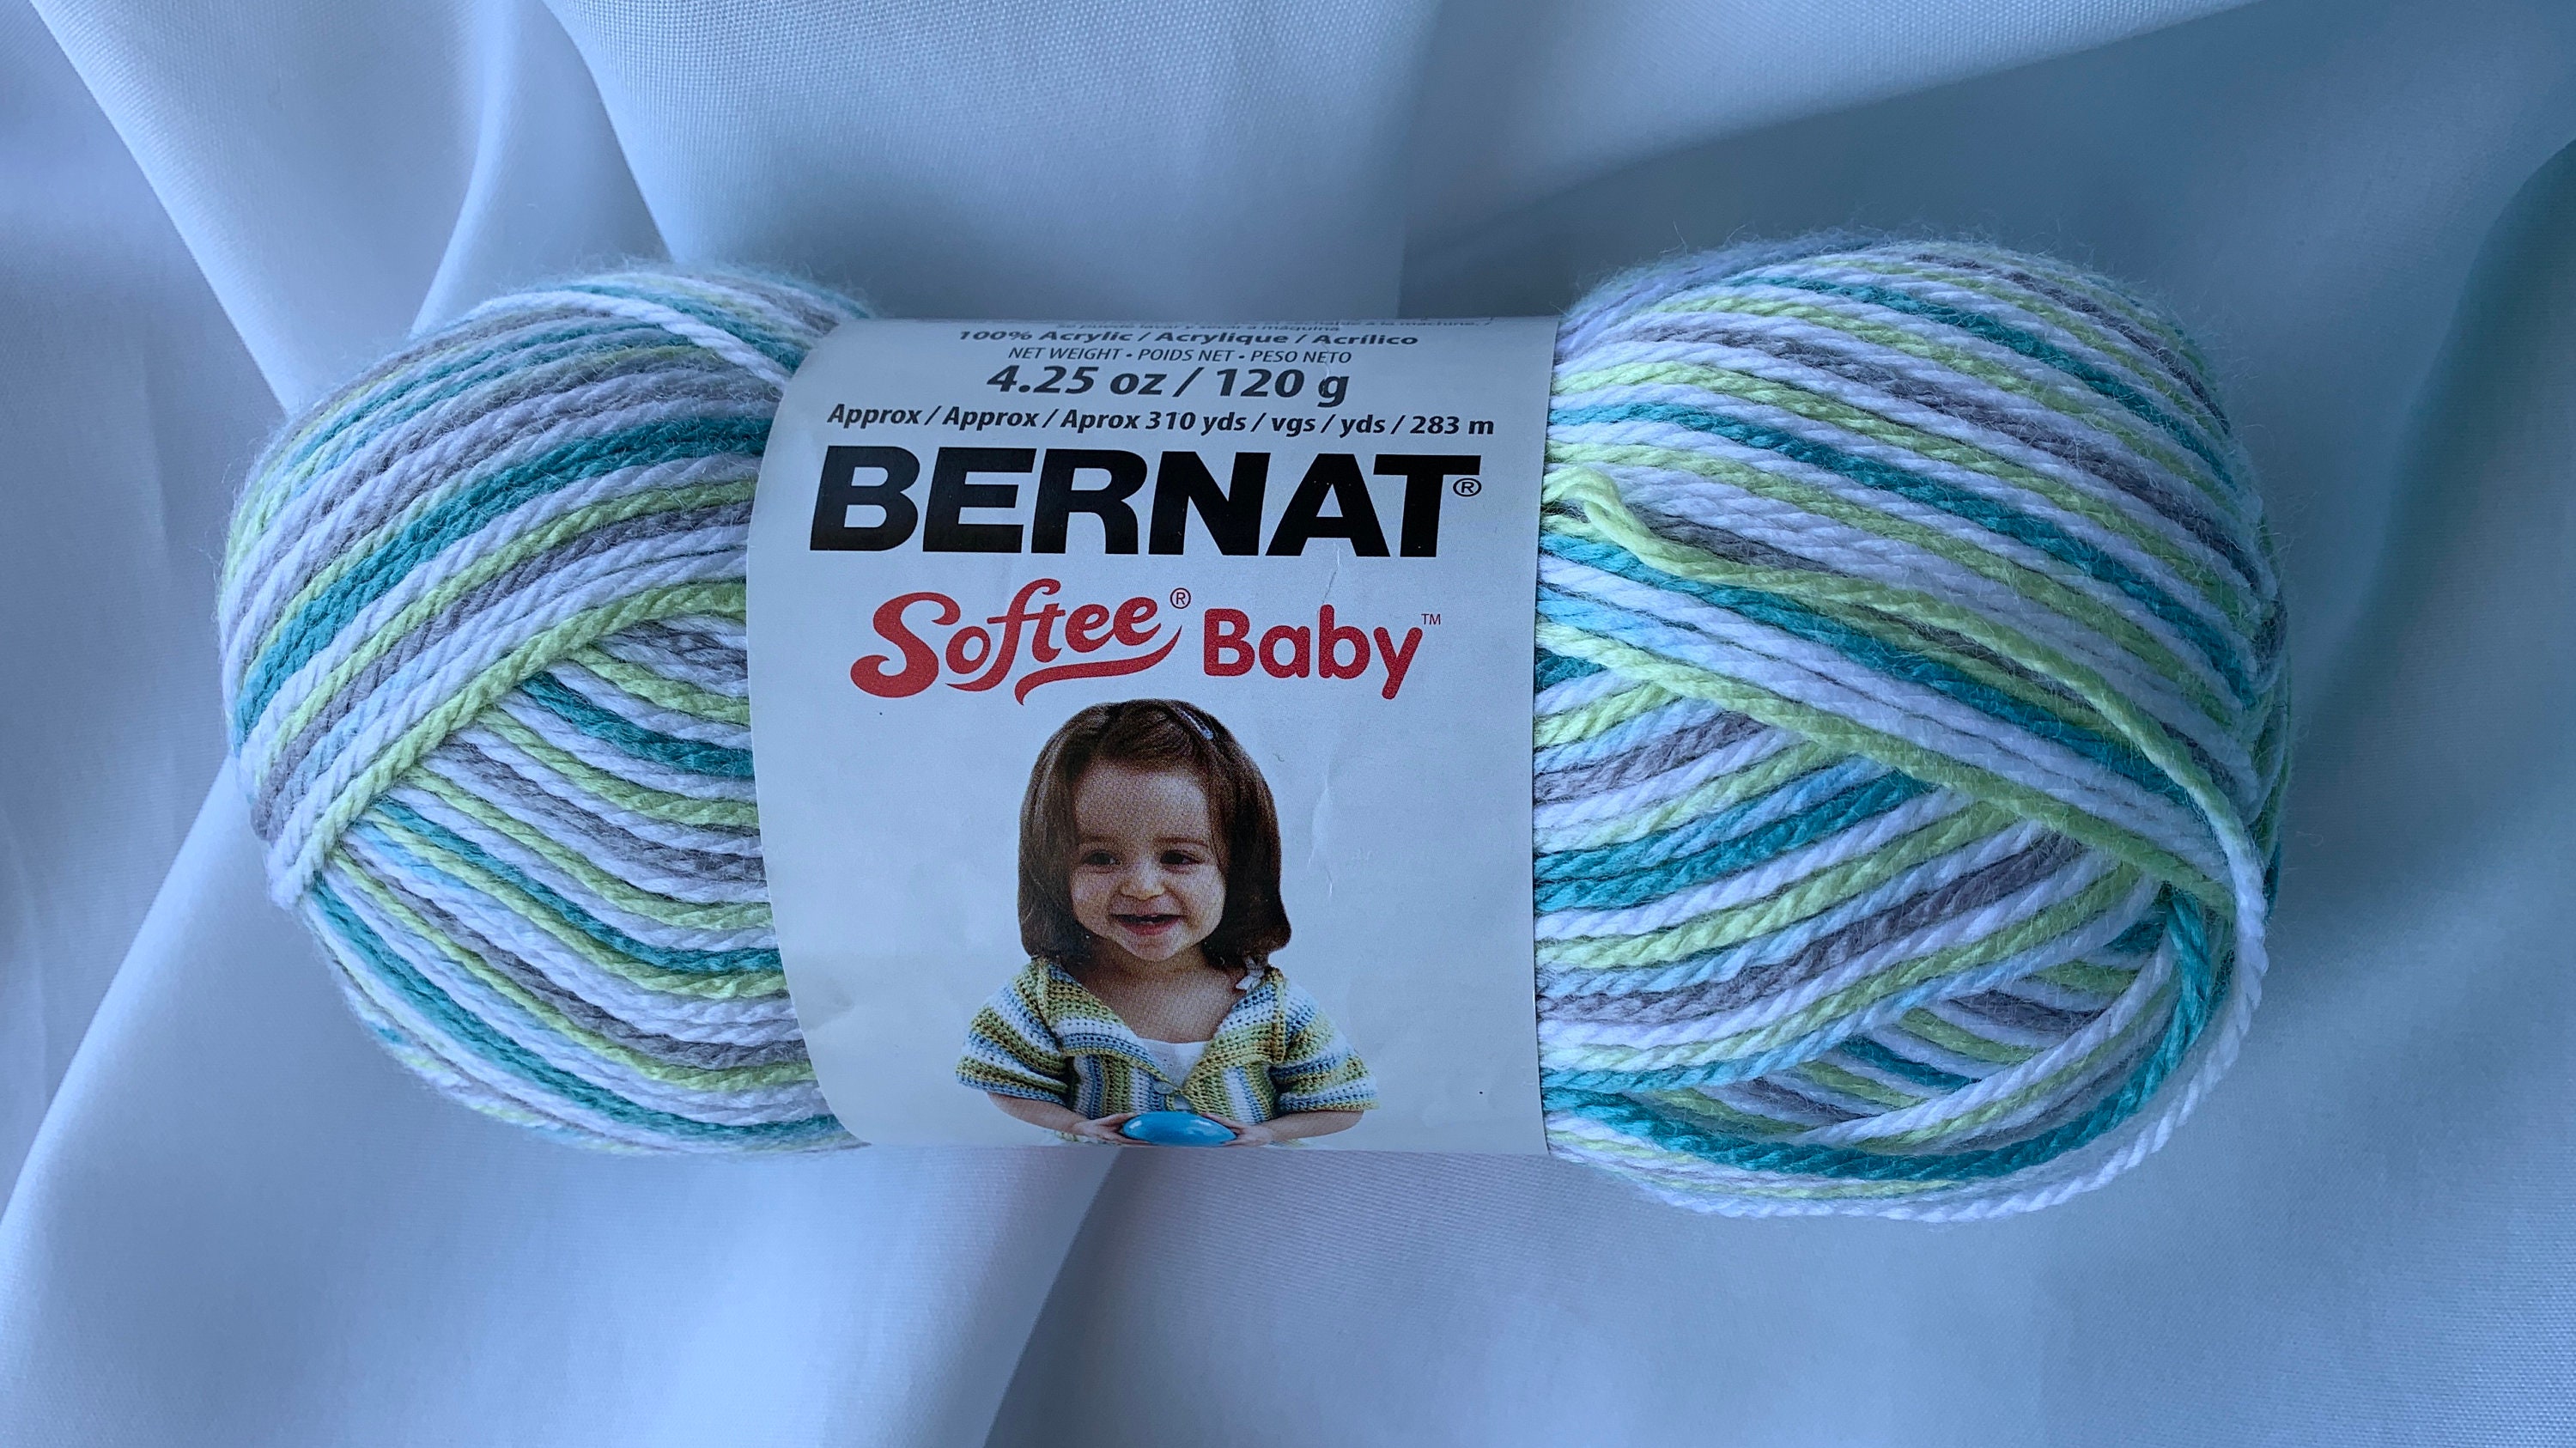 Bernat Softee Baby Yarn - Soft Red